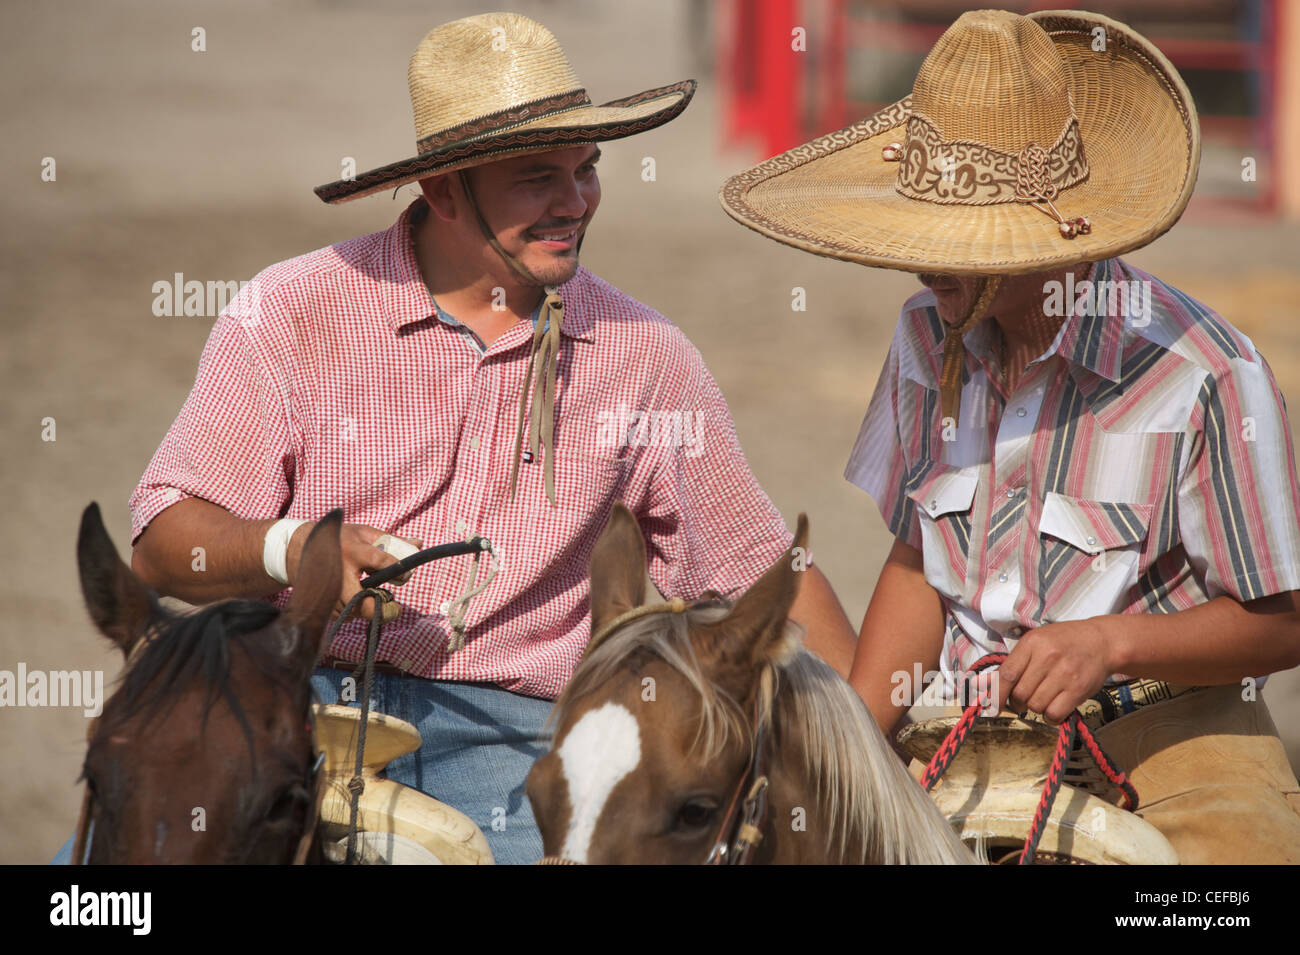 Mexican charros horsemen chatting in sombreros, Texas, US Stock Photo